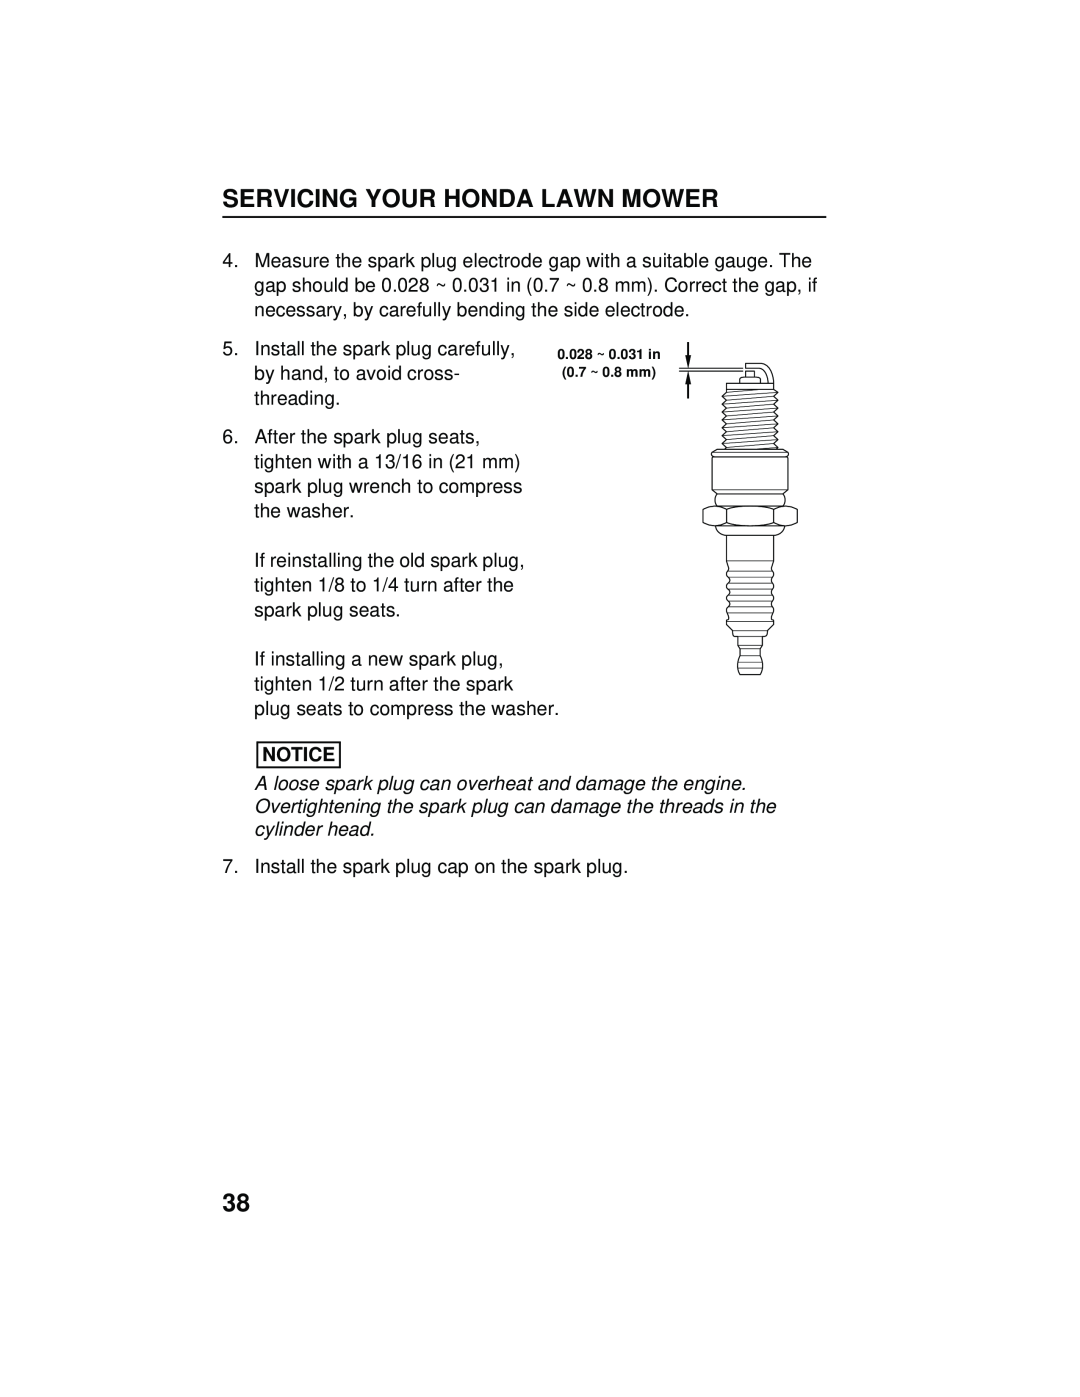 Honda Power Equipment HRB216TXA owner manual Servicing Your Honda Lawn Mower, Install the spark plug cap on the spark plug 